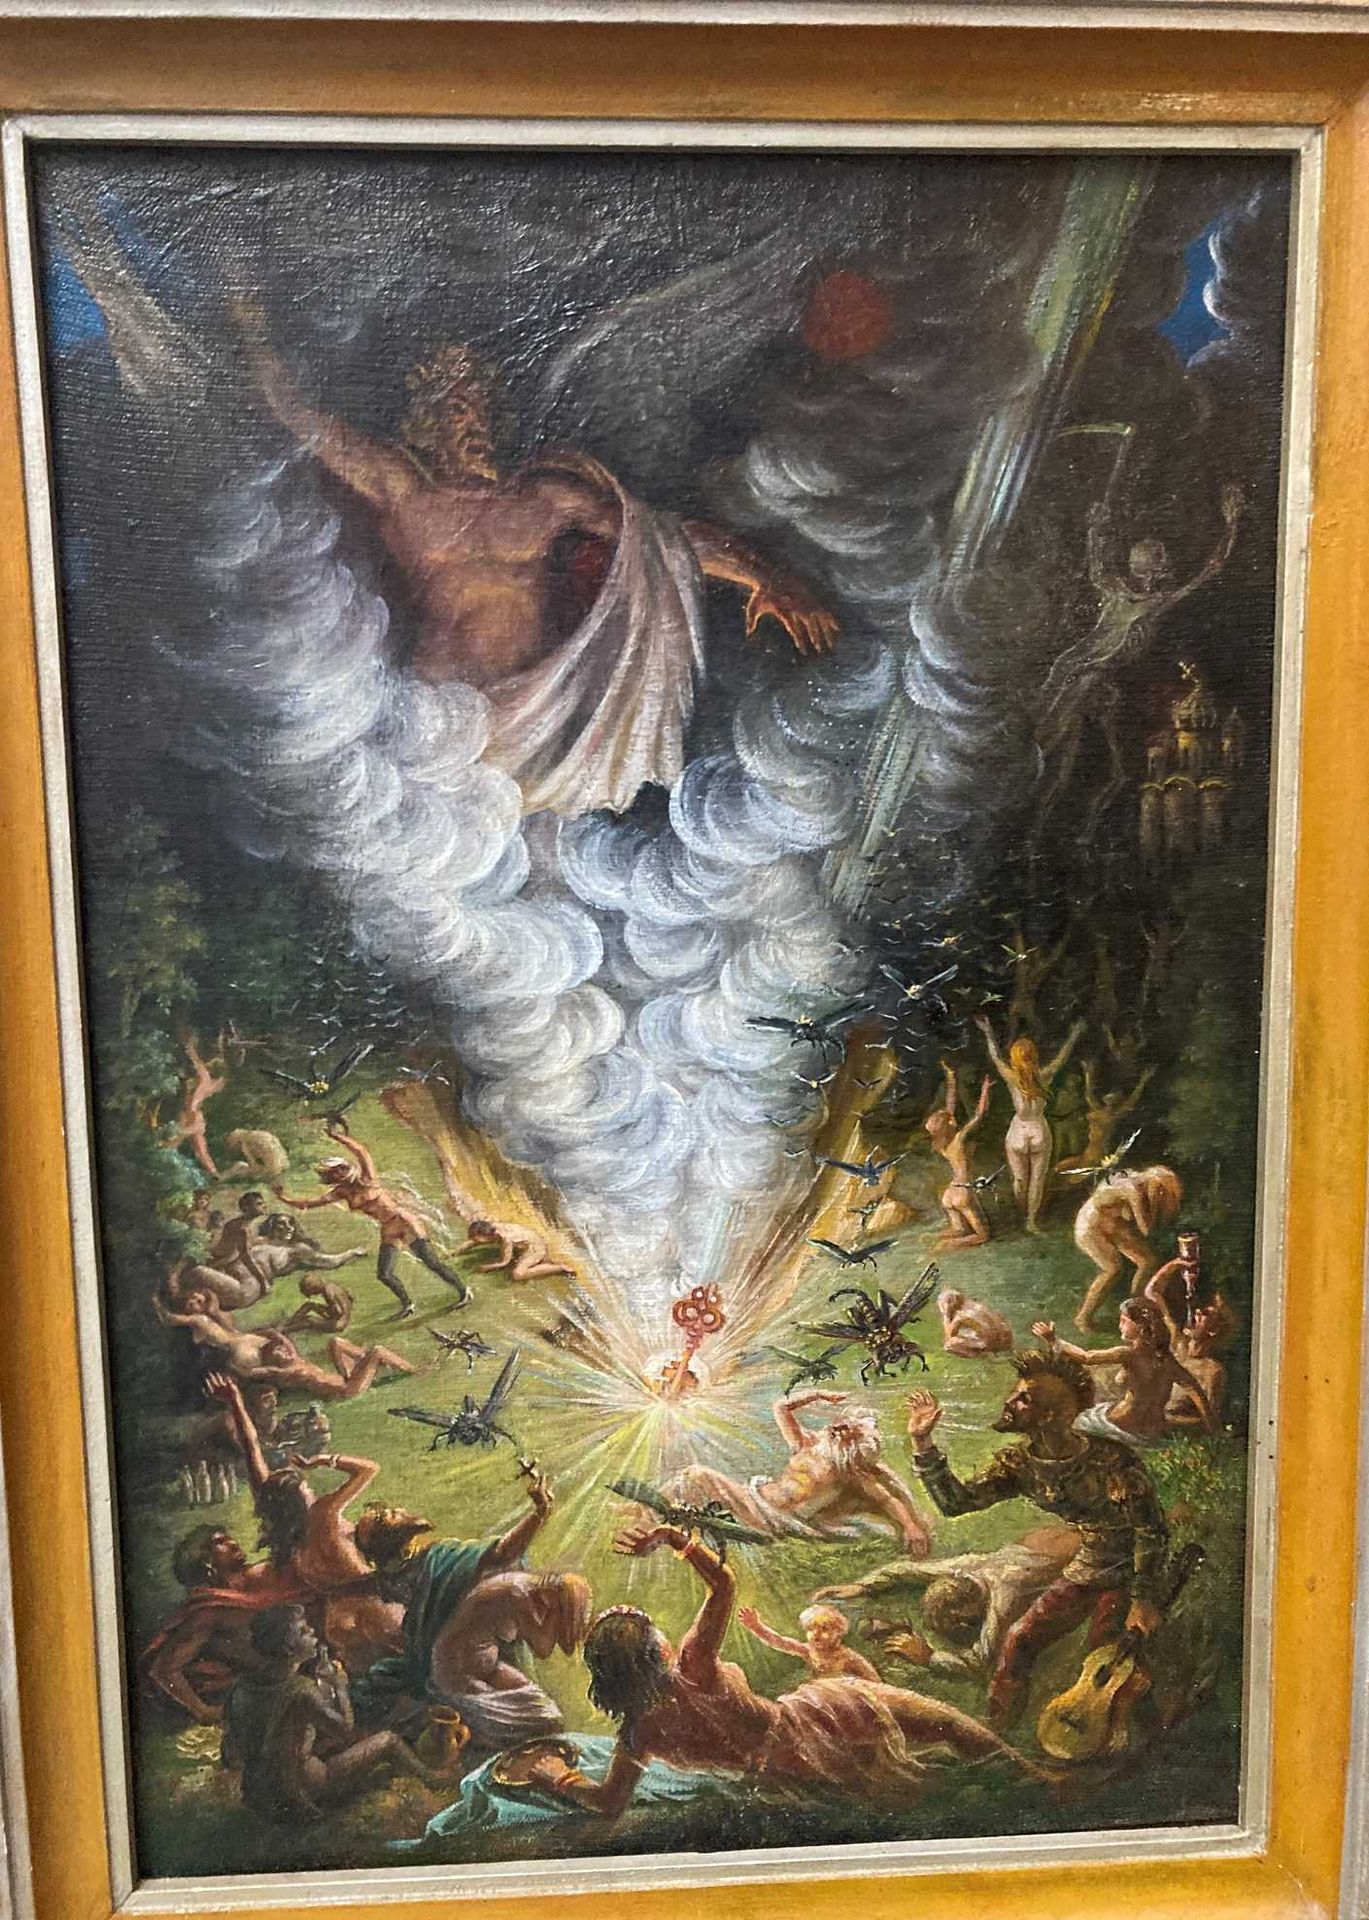 Null 东方超现实主义学派

神圣的愤怒

布面油画，背面有西里尔语题词，日期为1989年

65 x 44 厘米